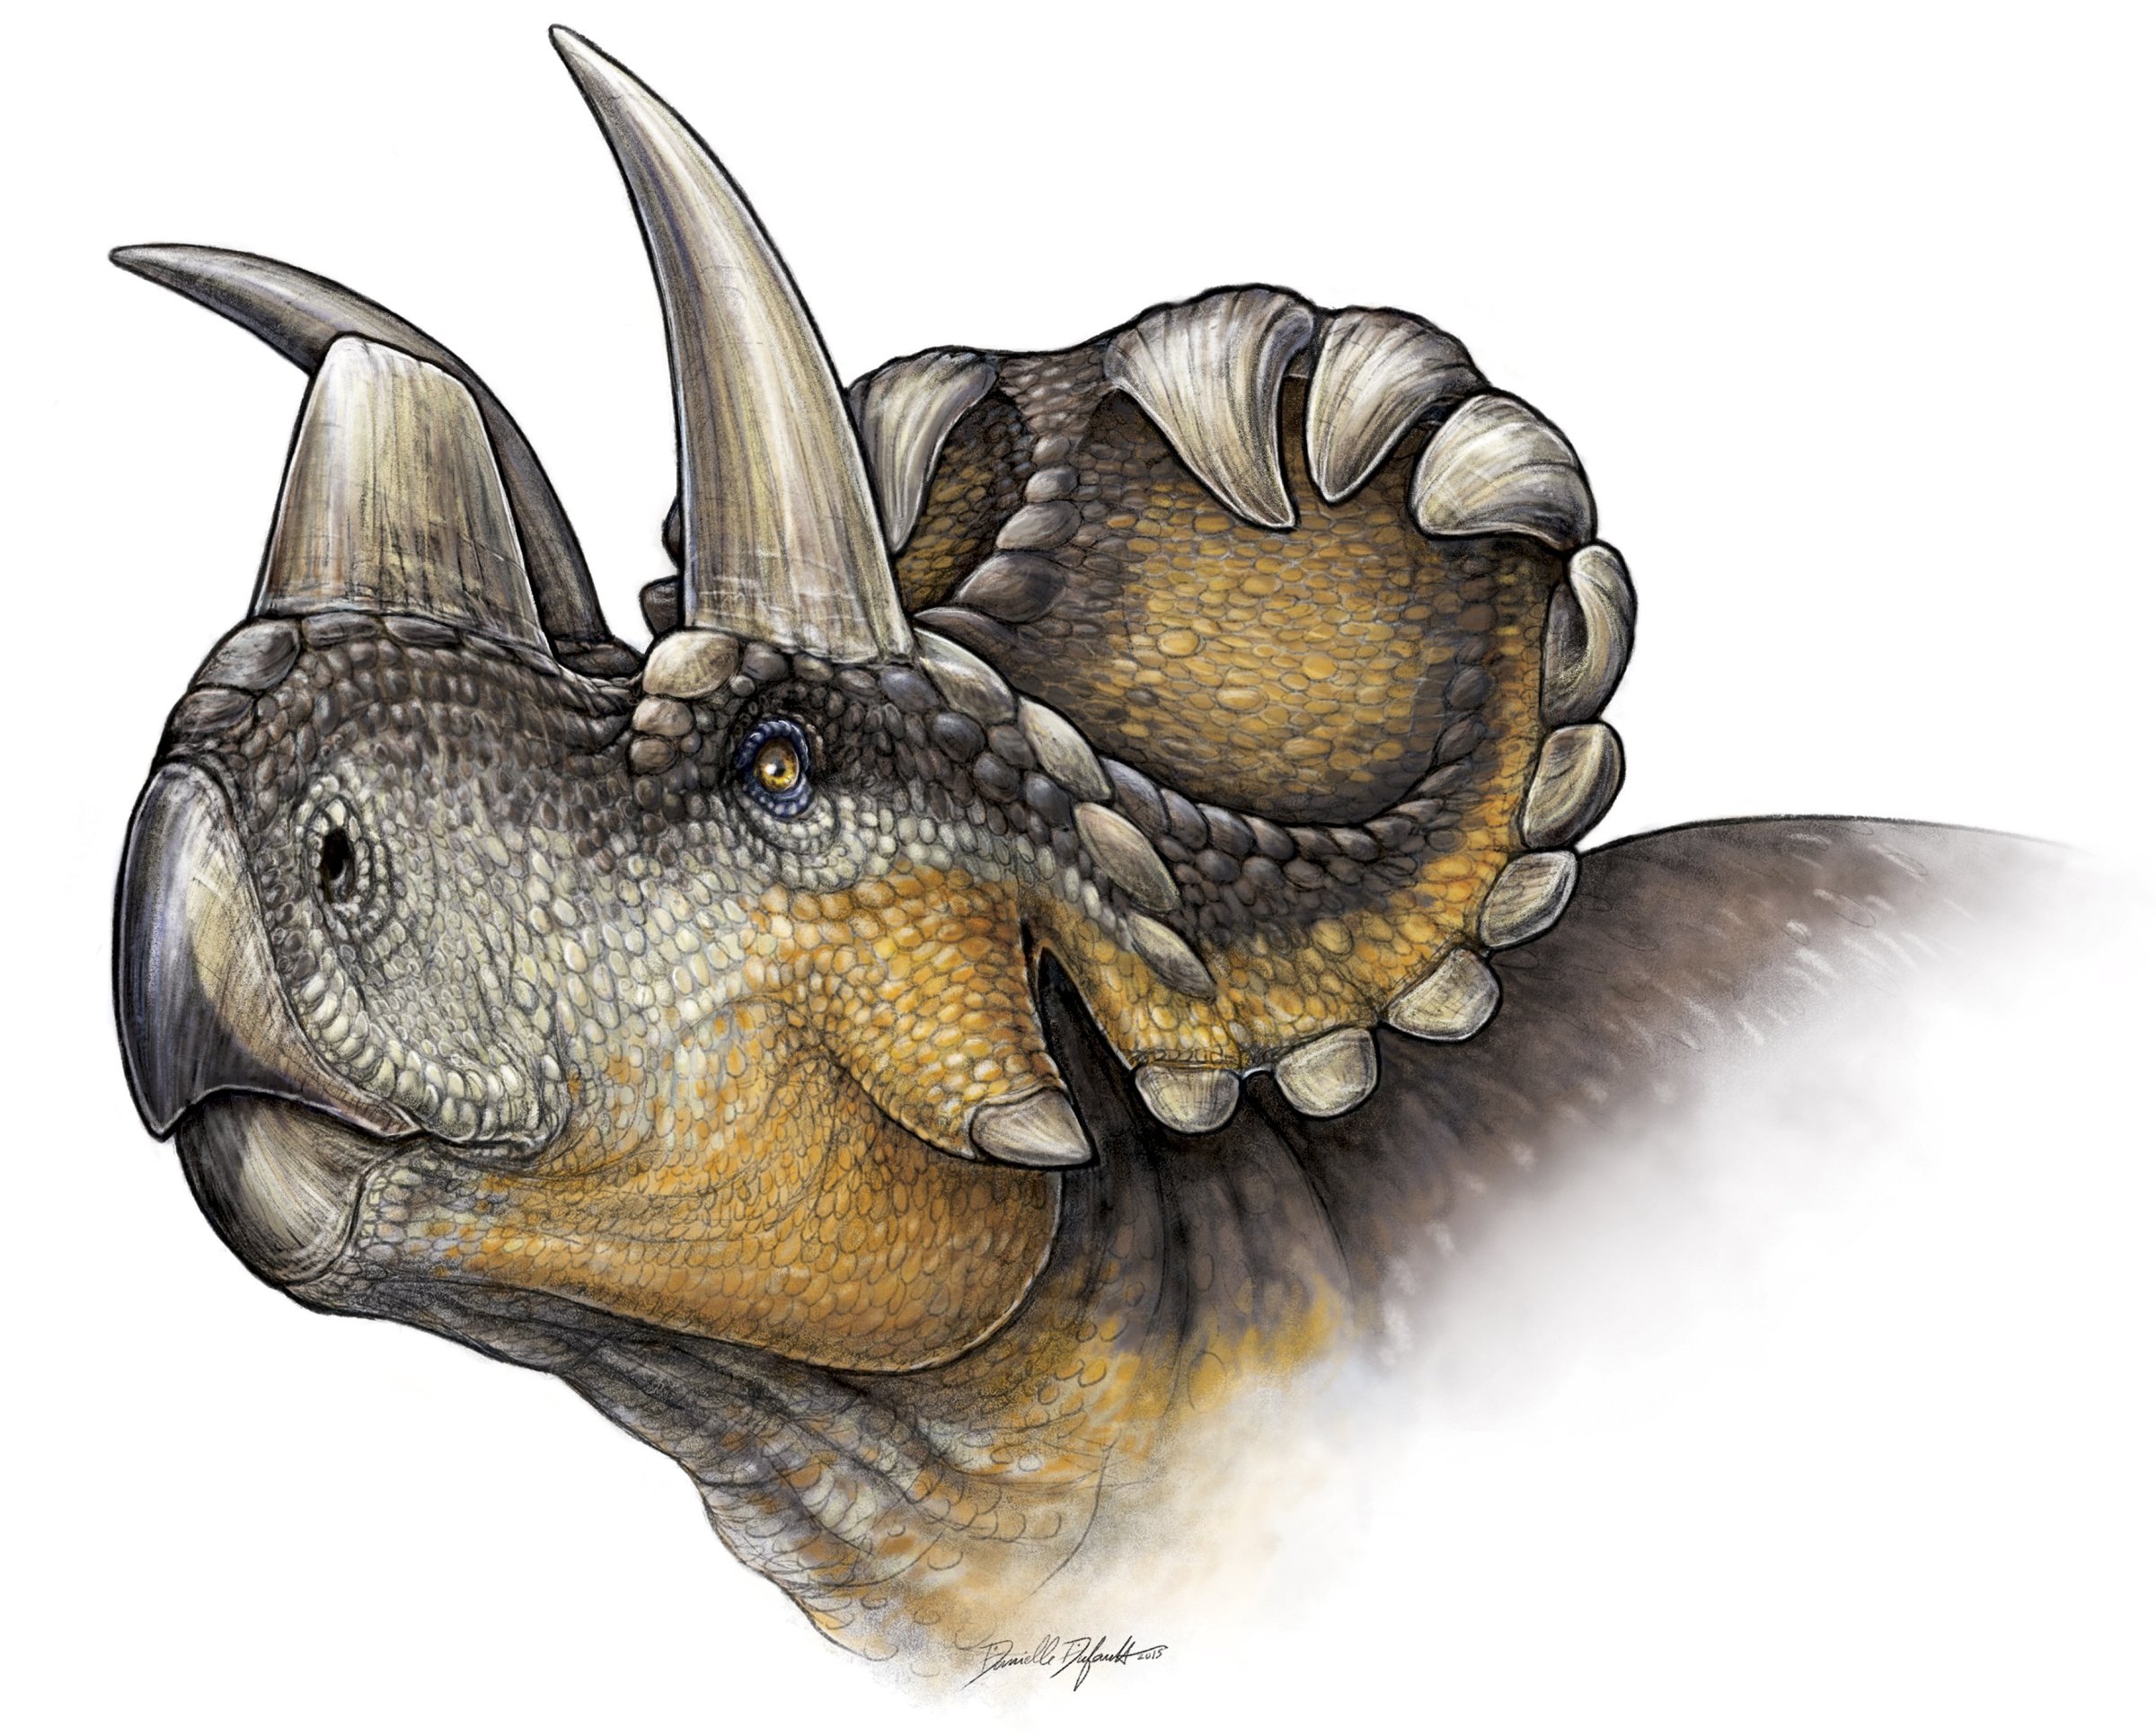 The Wendiceratops pinhornenis dinosaur is seen in a life reconstruction illustration.